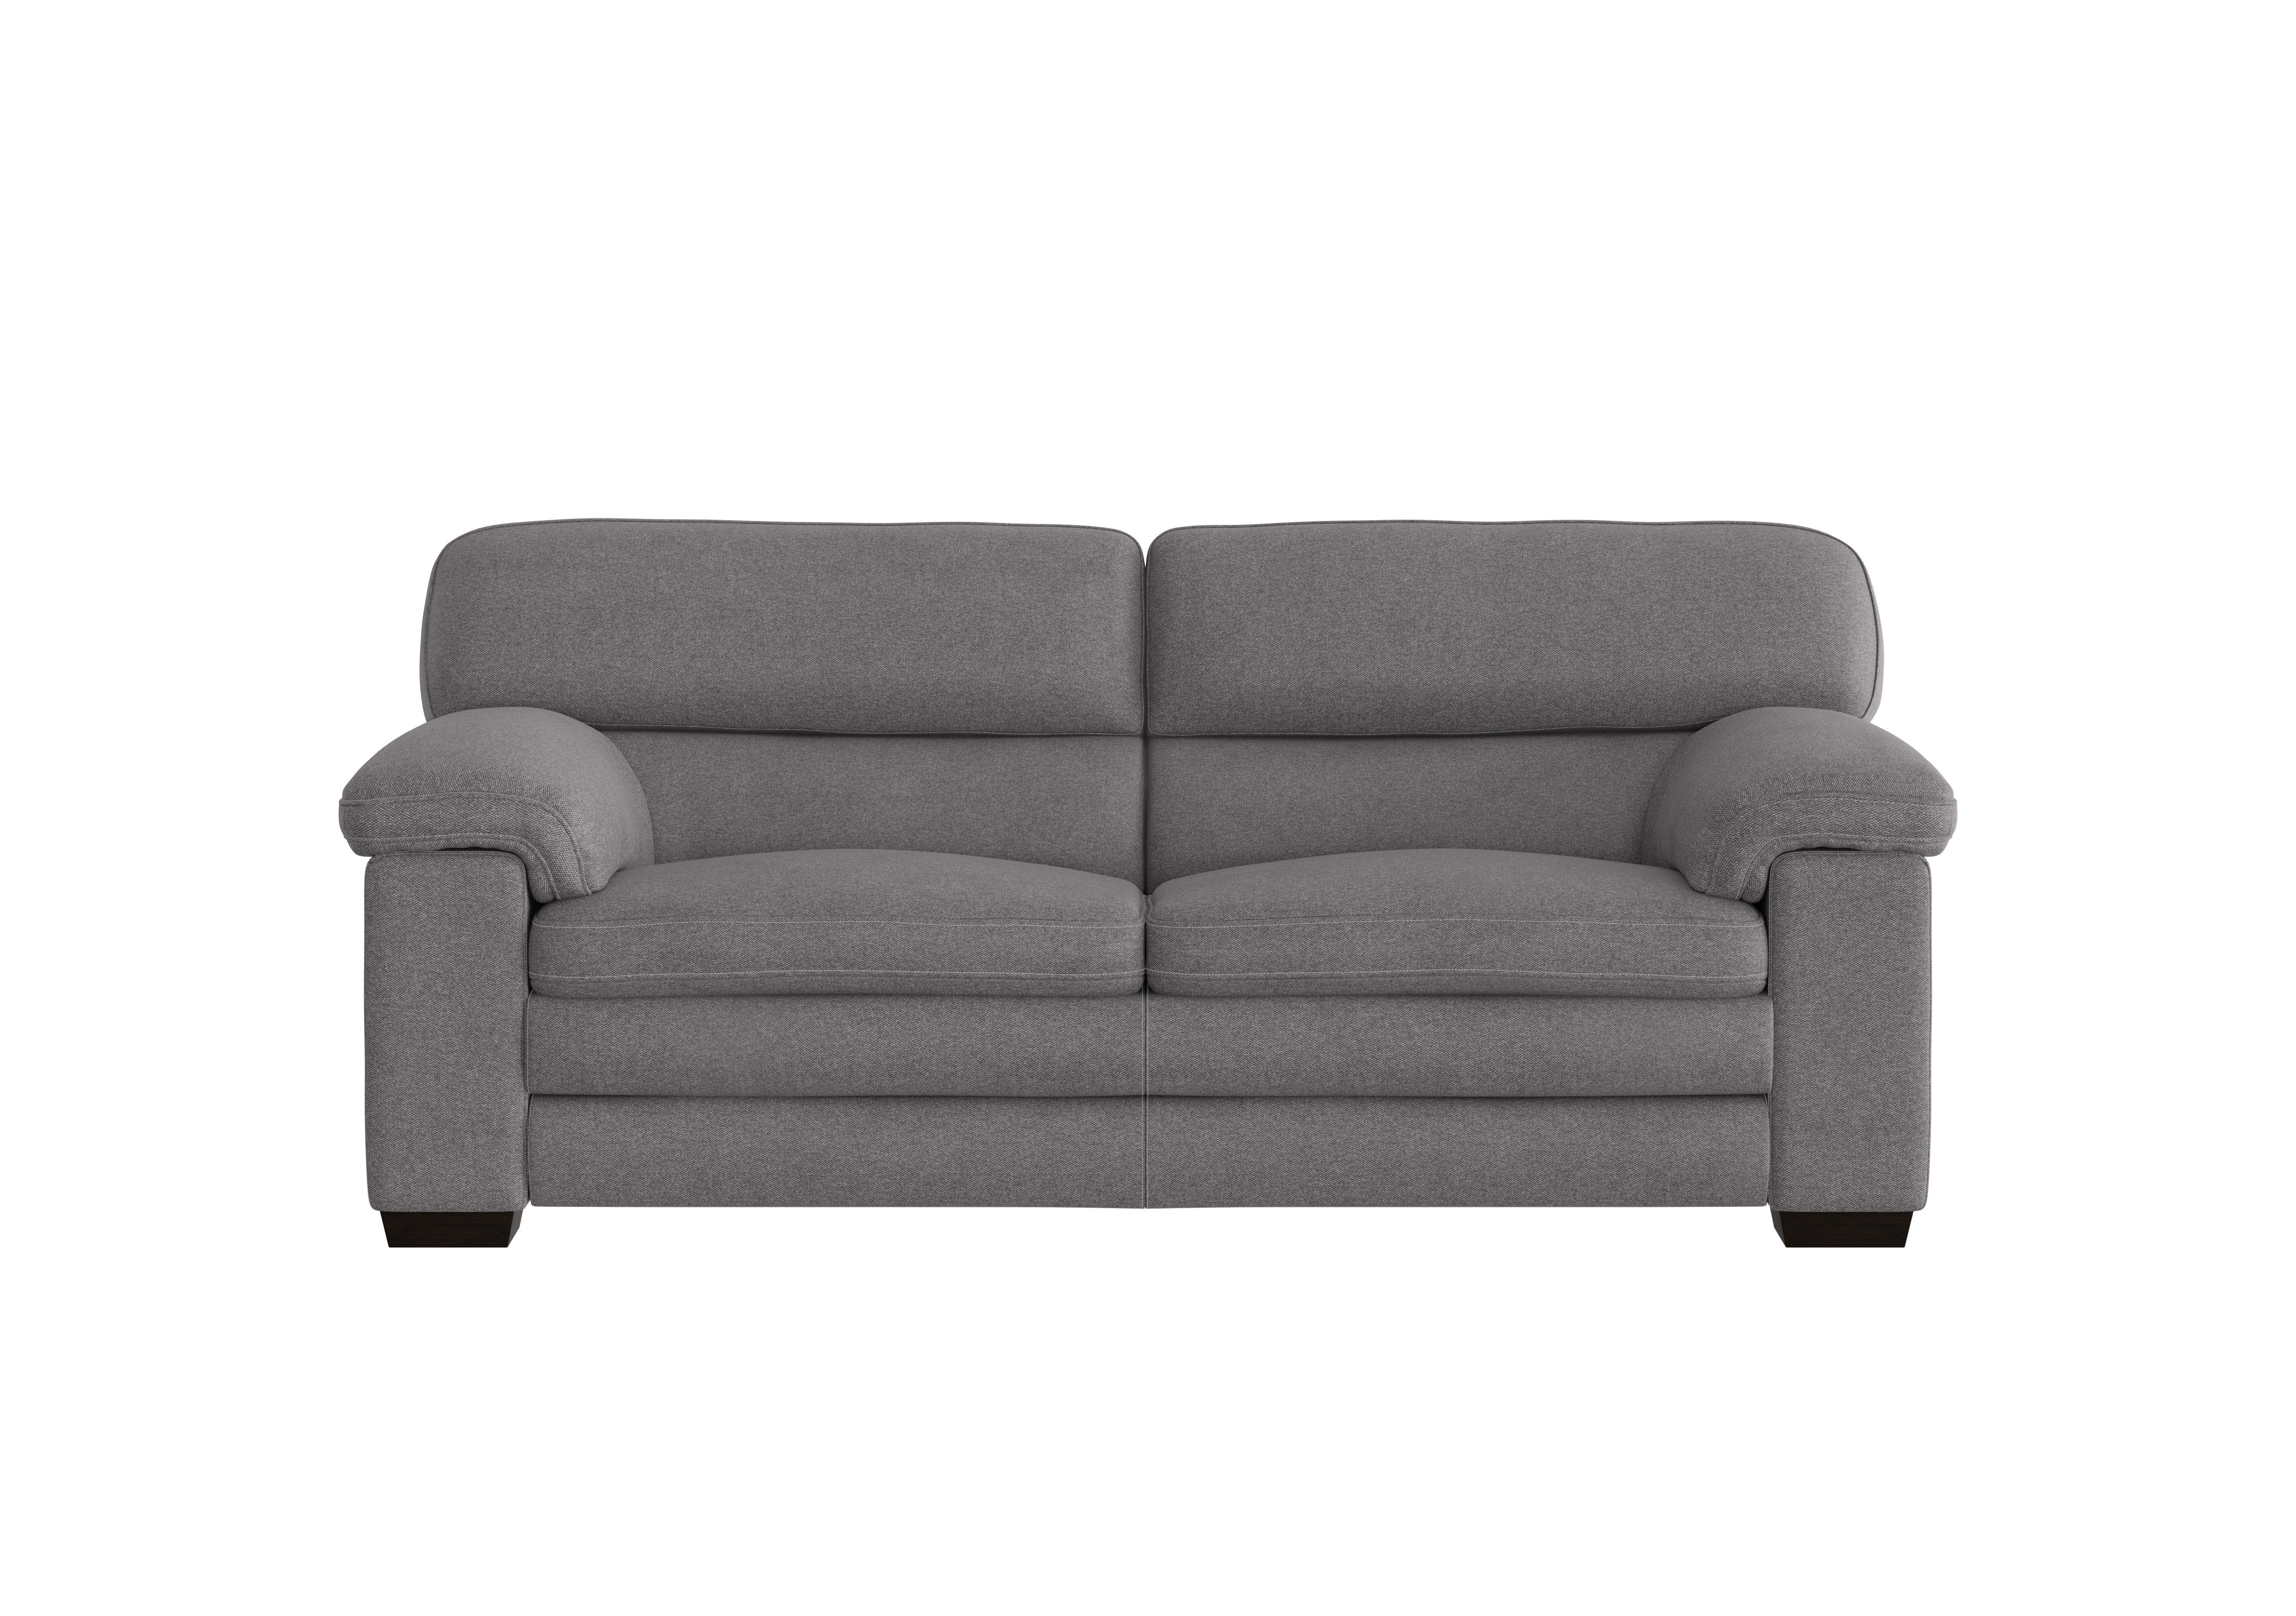 Cozee Fabric 2.5 Seater Sofa in Fab-Ska-R31 Charcoal Grey on Furniture Village